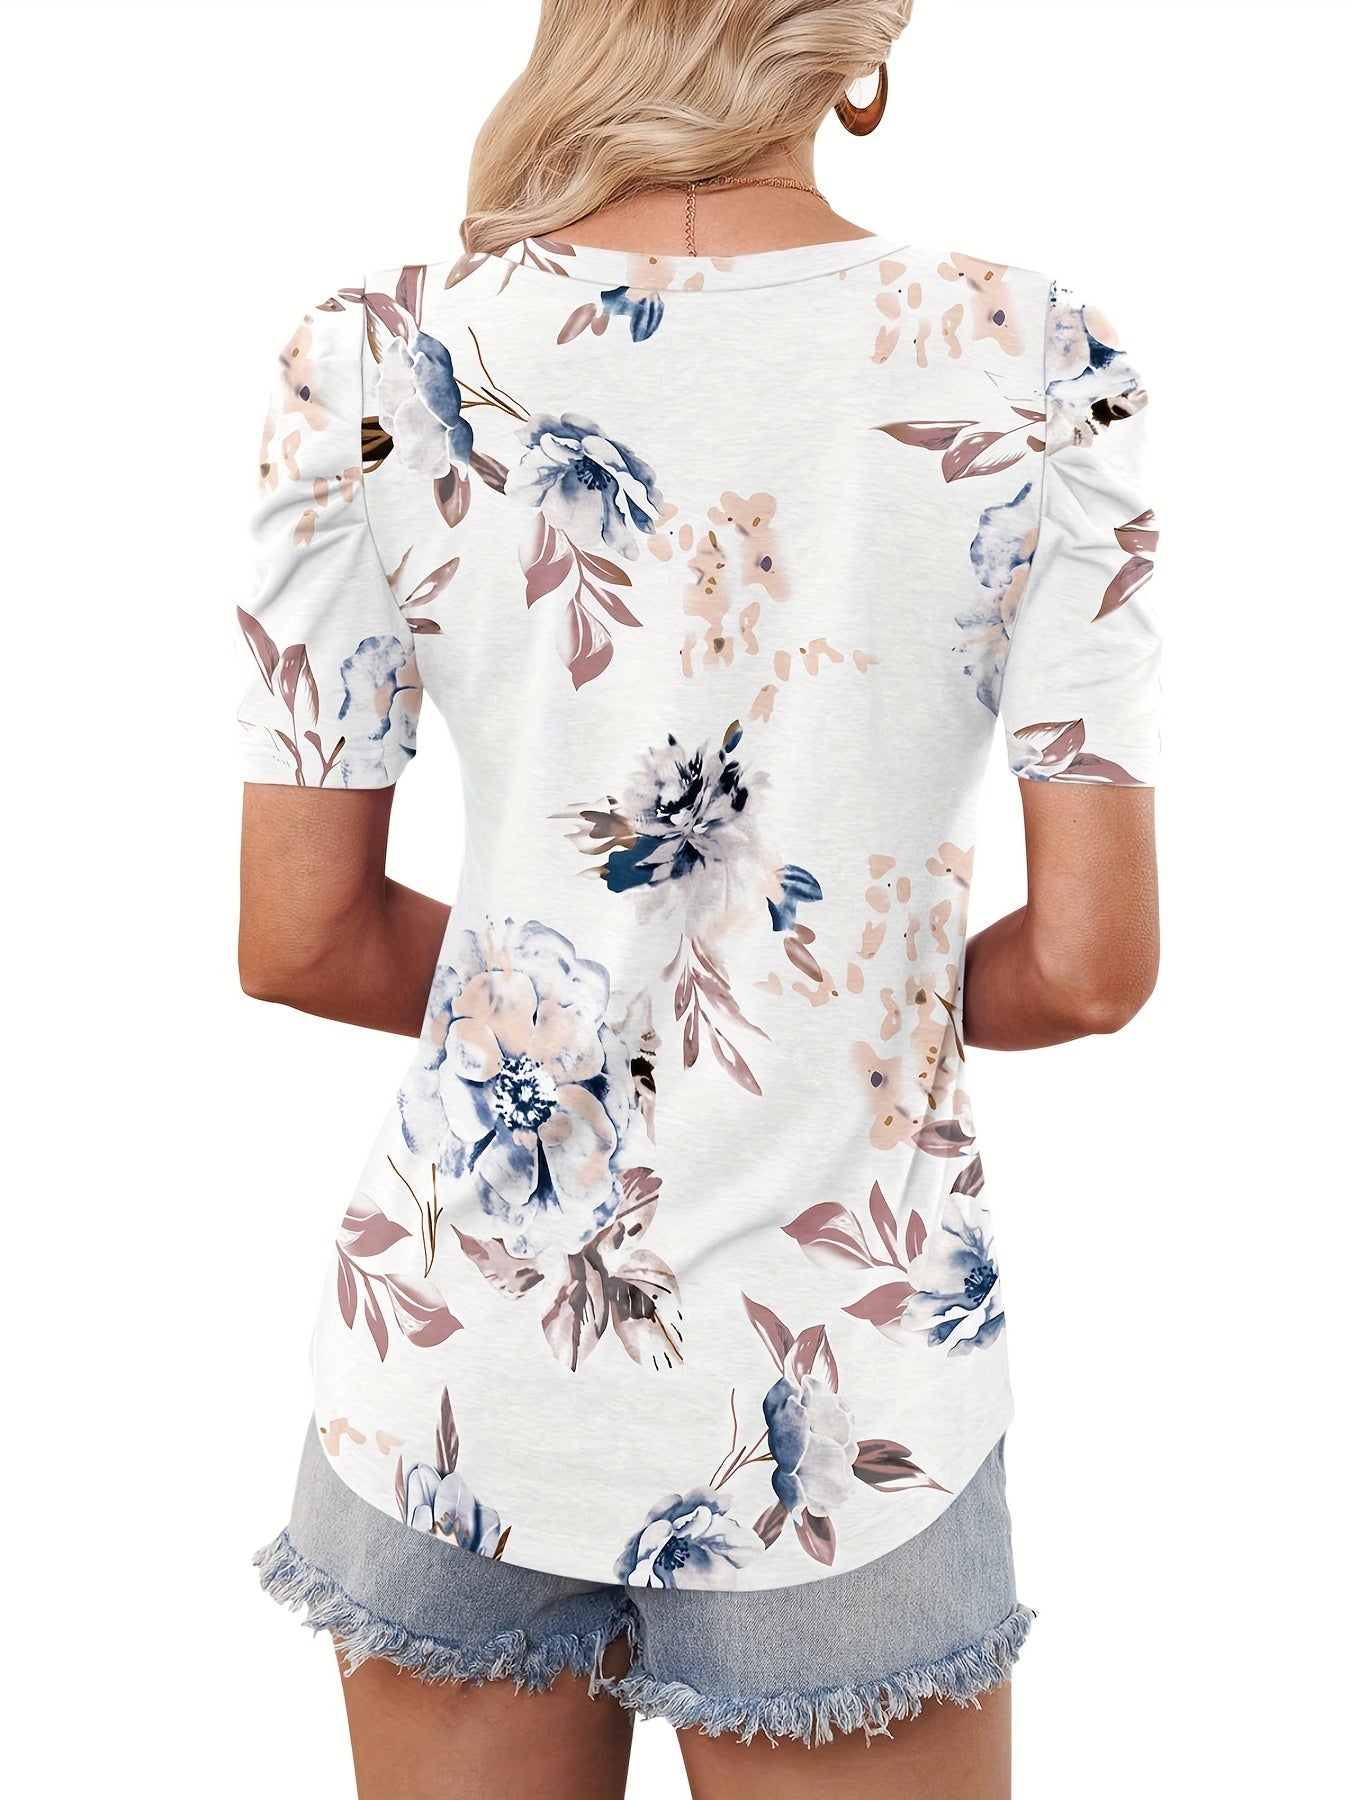 Vzyzv Vintage Floral Print T-Shirt, Random Print V Neck Short Sleeve Casual Top For Summer & Spring, Women's Clothing